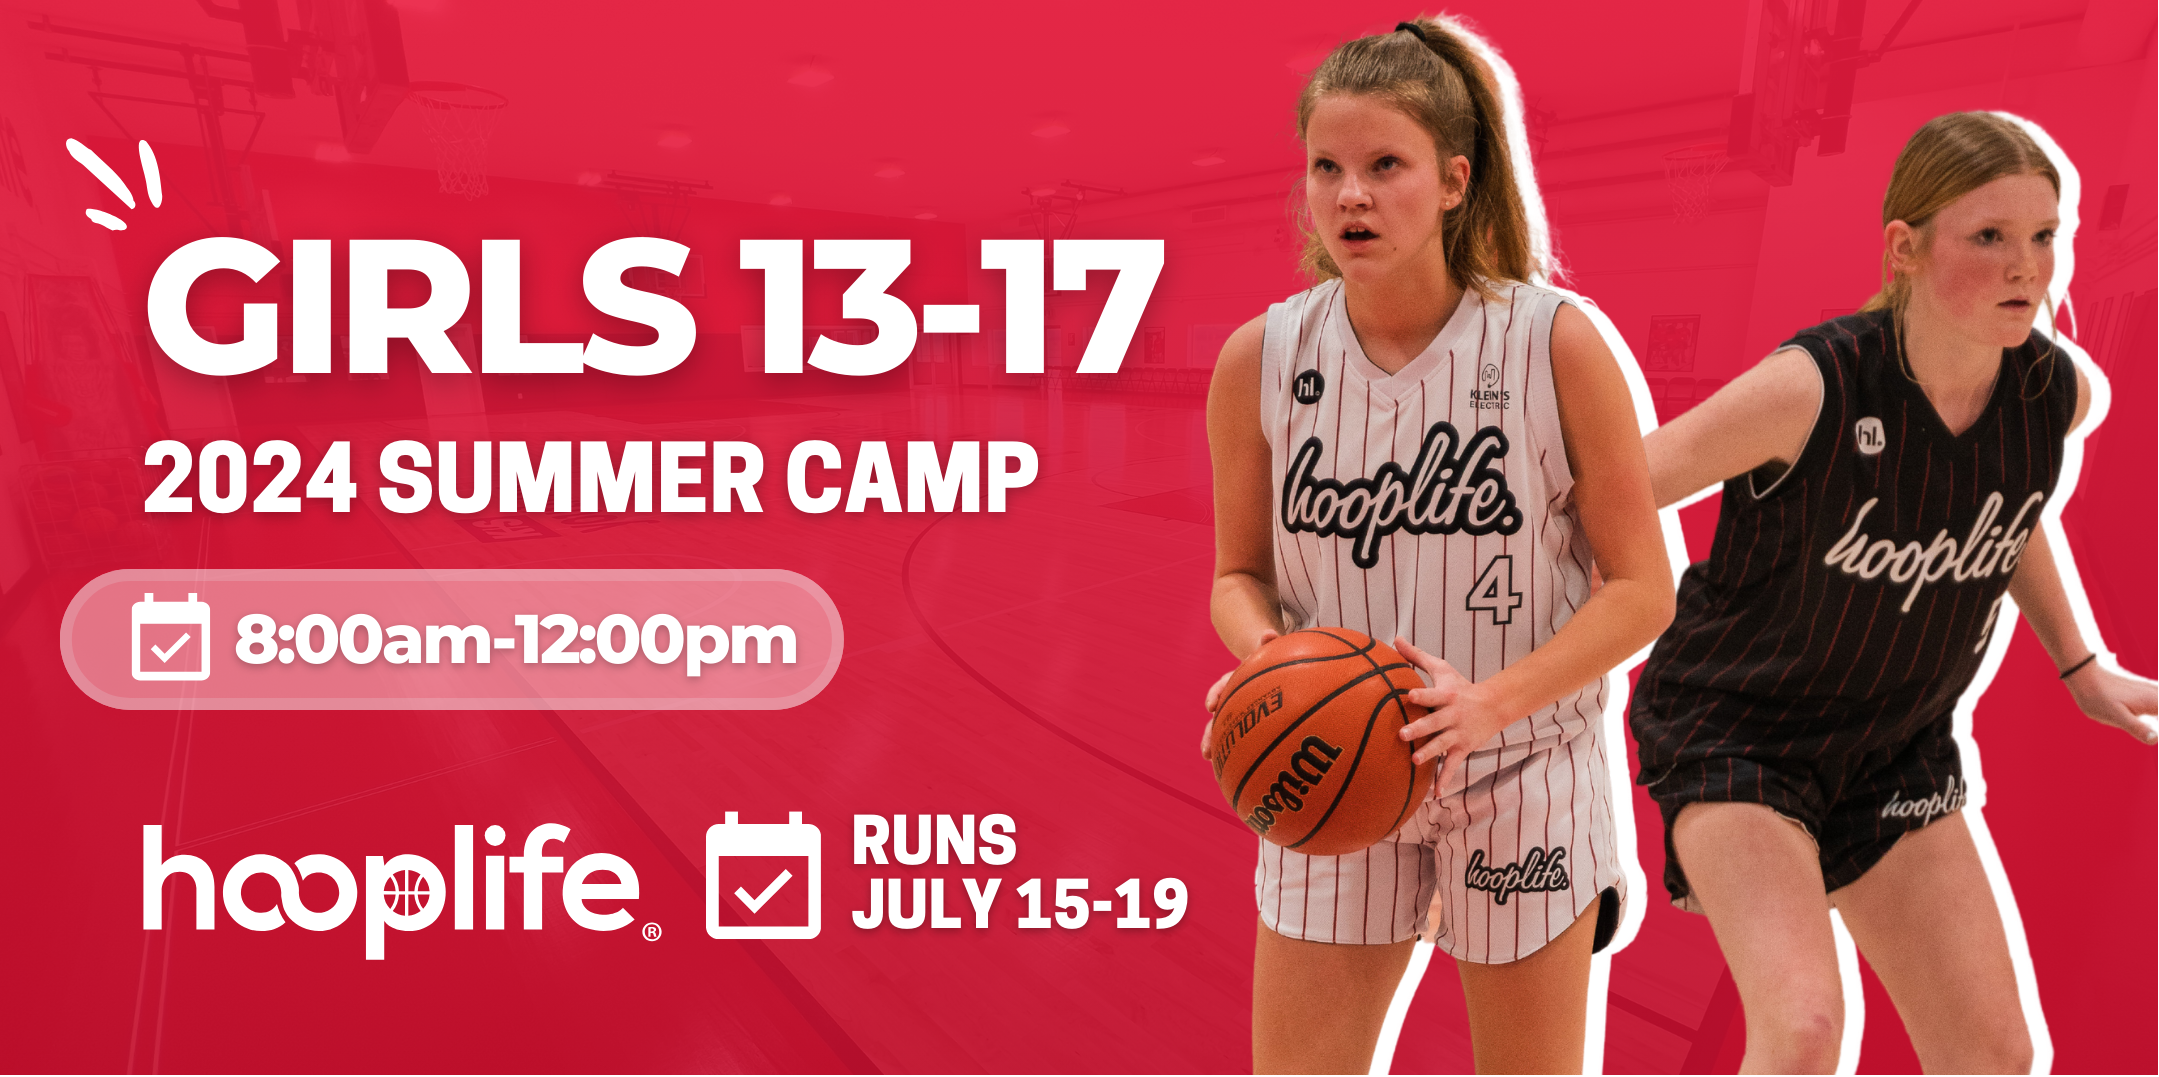 Girls 13-17 Summer Camp | July 15-19